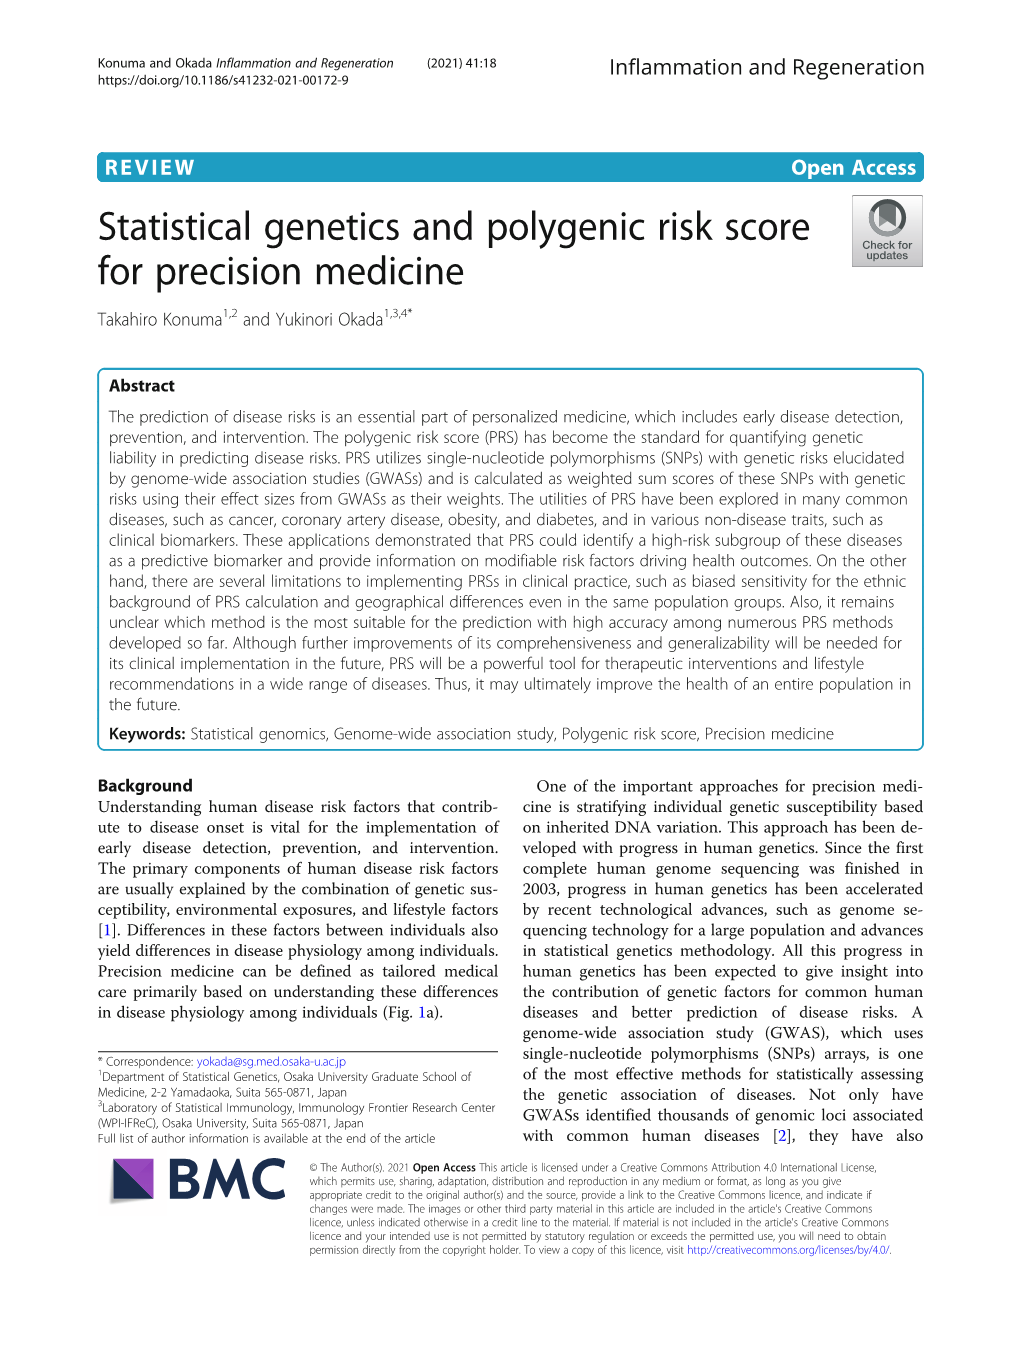 Statistical Genetics and Polygenic Risk Score for Precision Medicine Takahiro Konuma1,2 and Yukinori Okada1,3,4*